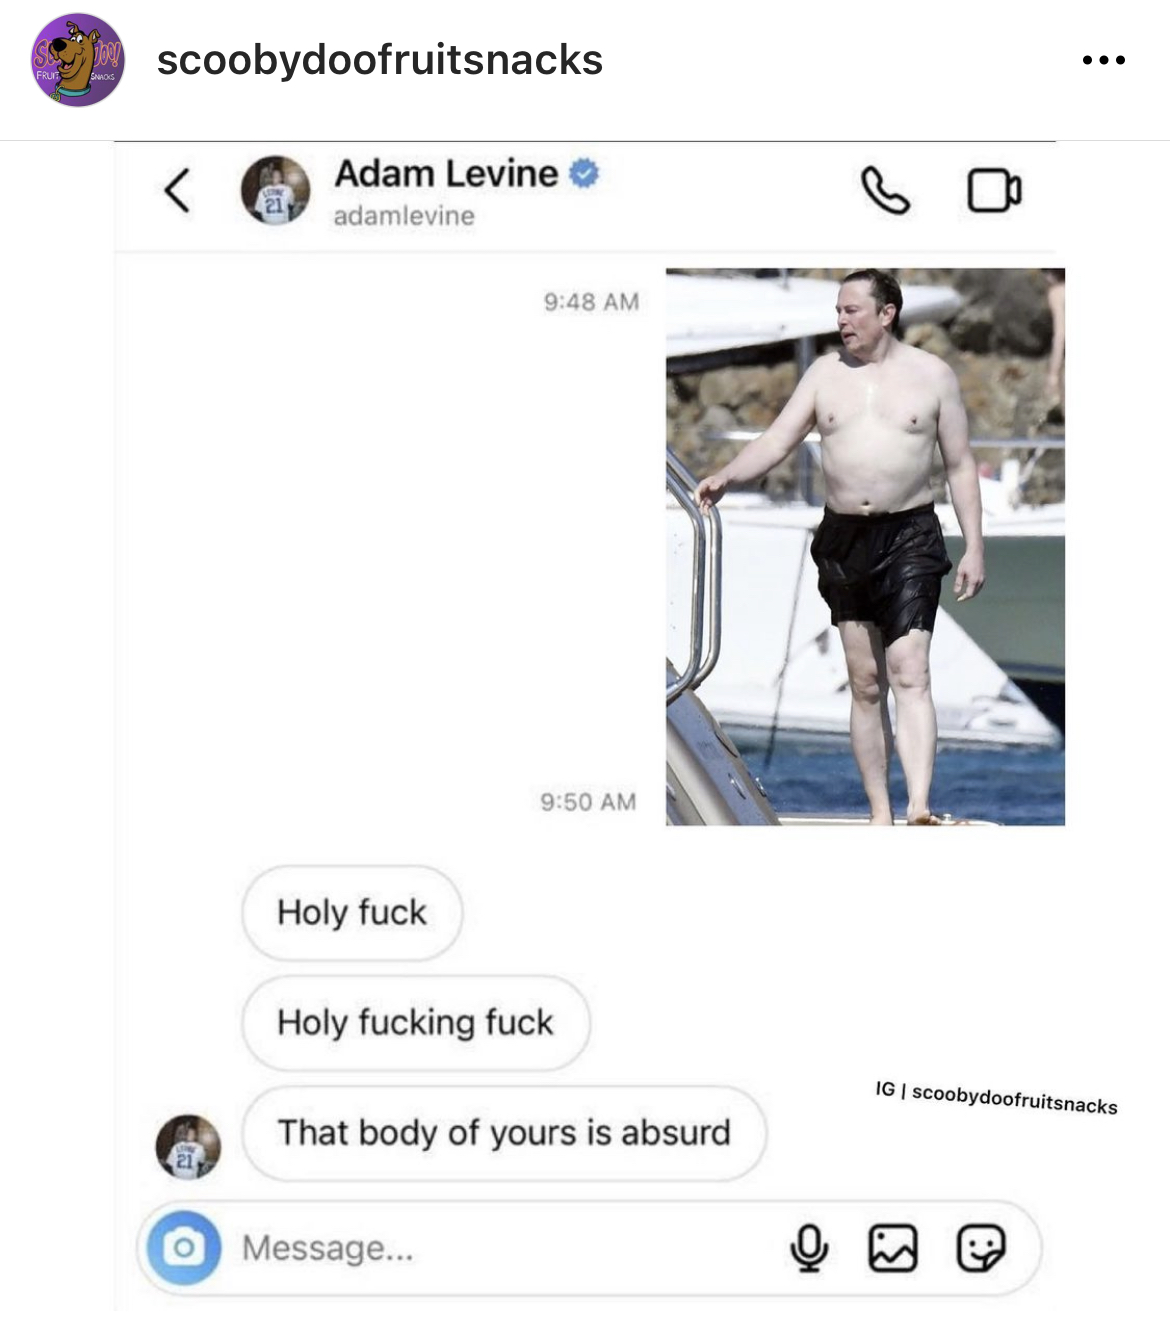 Adam Levine Sexting memes - elon musk shirtless meme - scoobydoofruitsnacks Adam Levine adamlevine Message... Holy fuck Holy fucking fuck That body of yours is absurd 10 scoobydoofruitsnacks St E